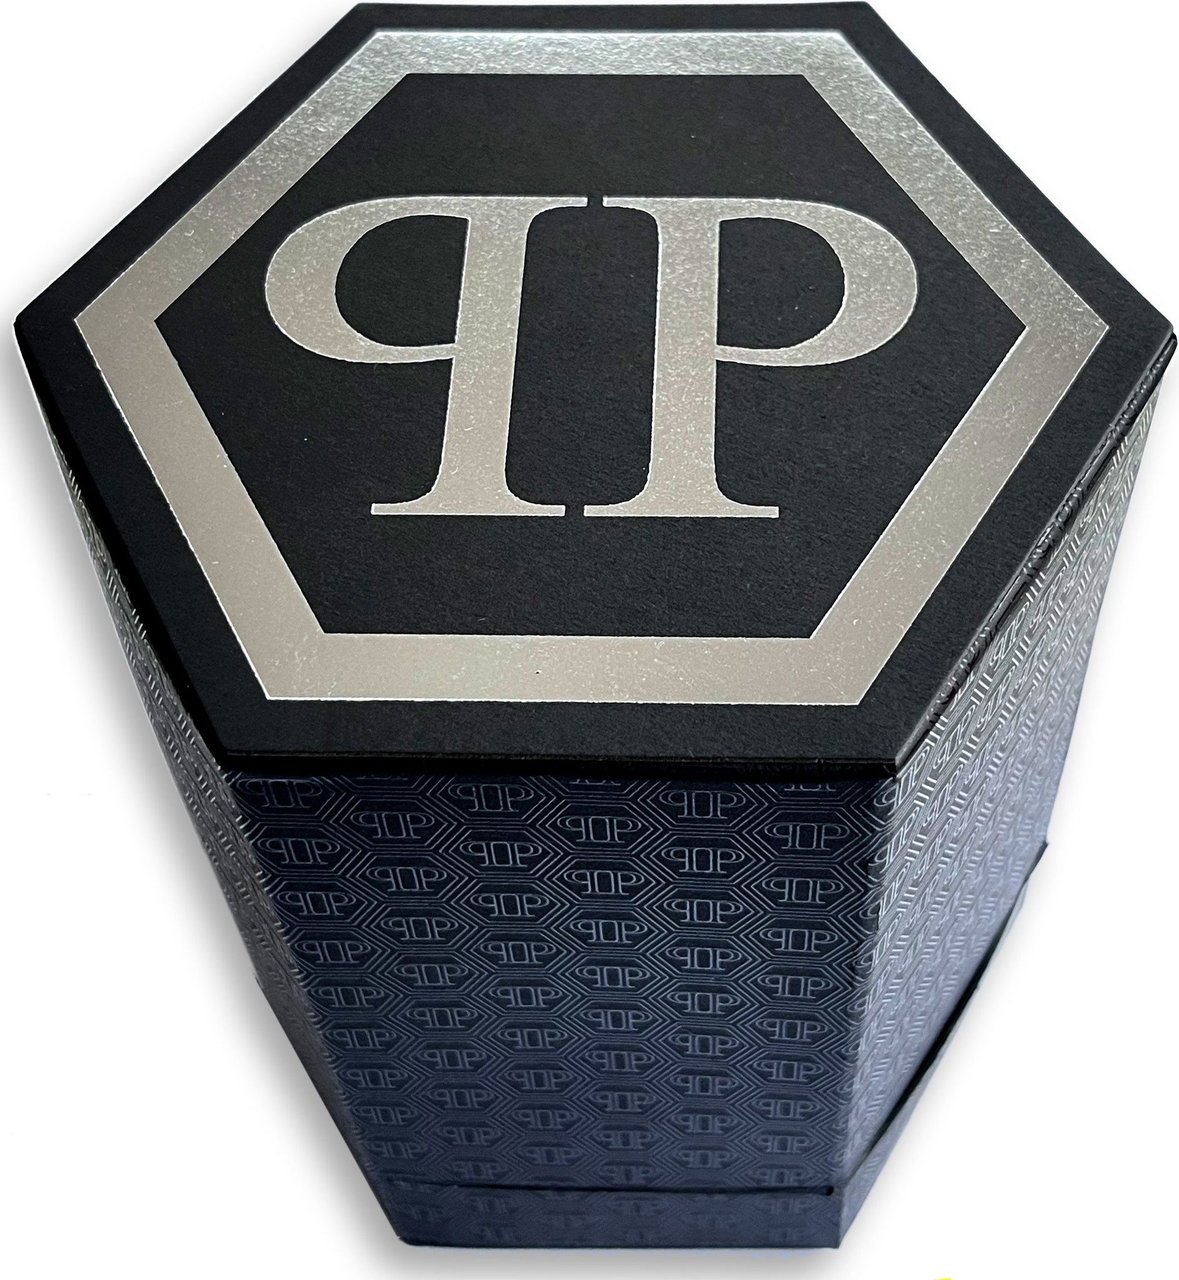 Philipp Plein $pectre Chrono PWSAA0523 horloge 44 mm Zwart